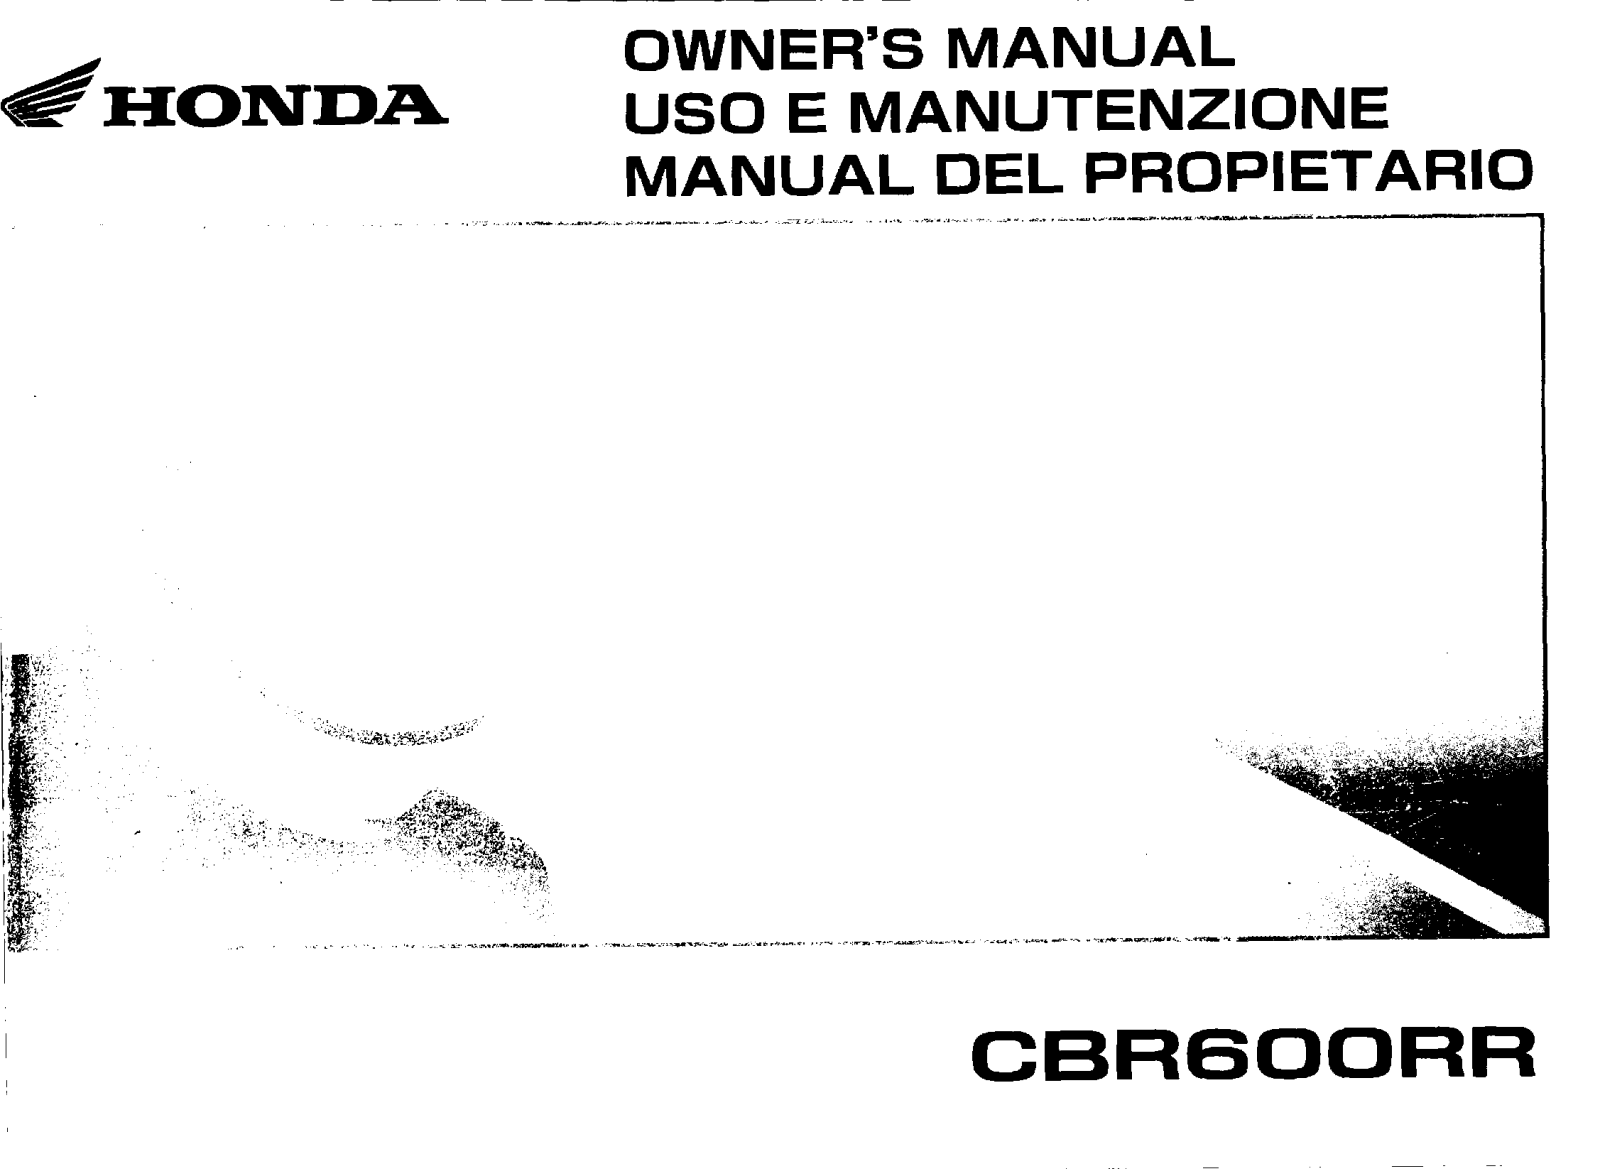 Honda CBR600RR6 Owner's Manual